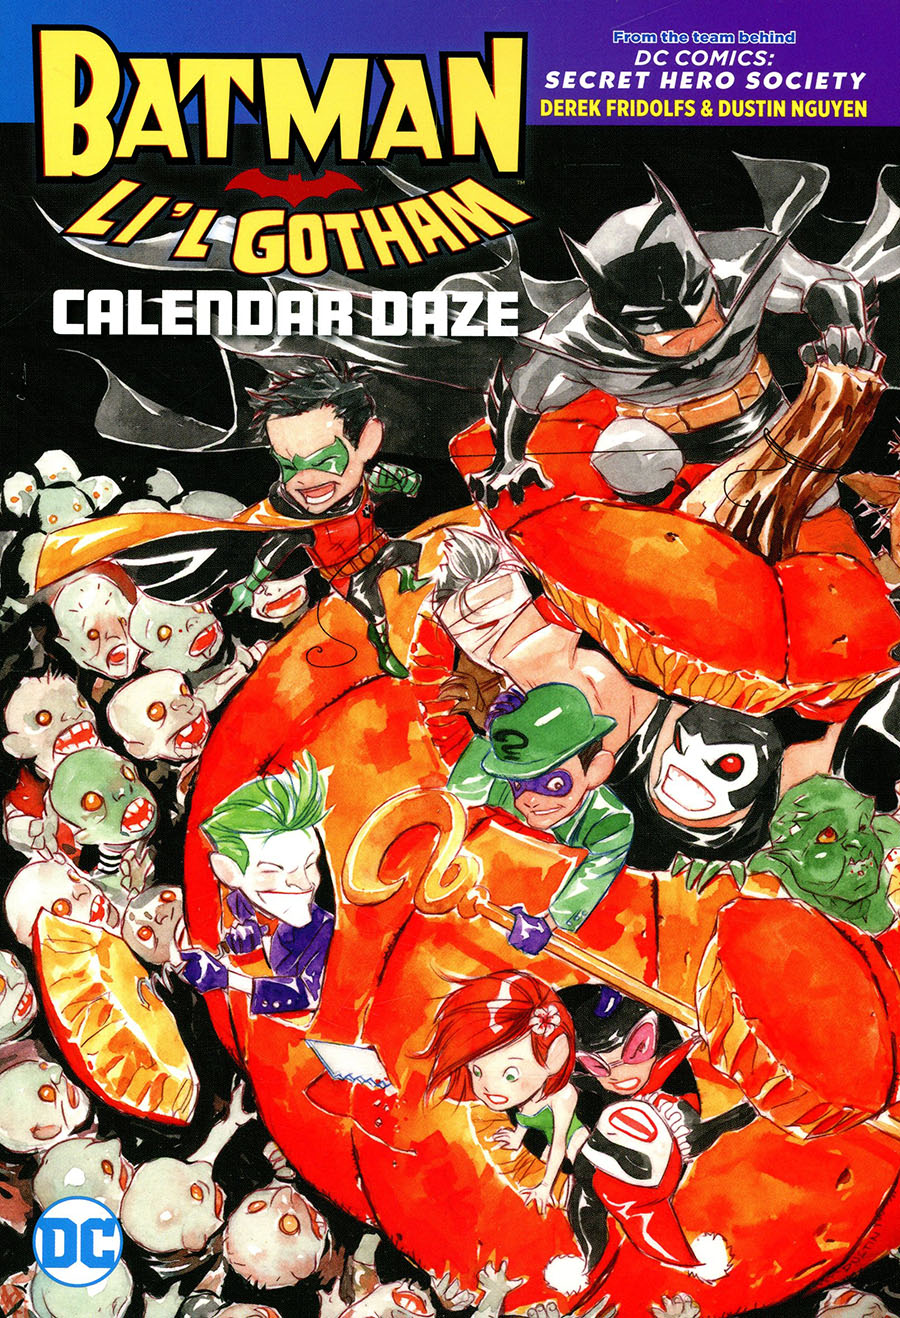 Batman Lil Gotham Calendar Daze TP